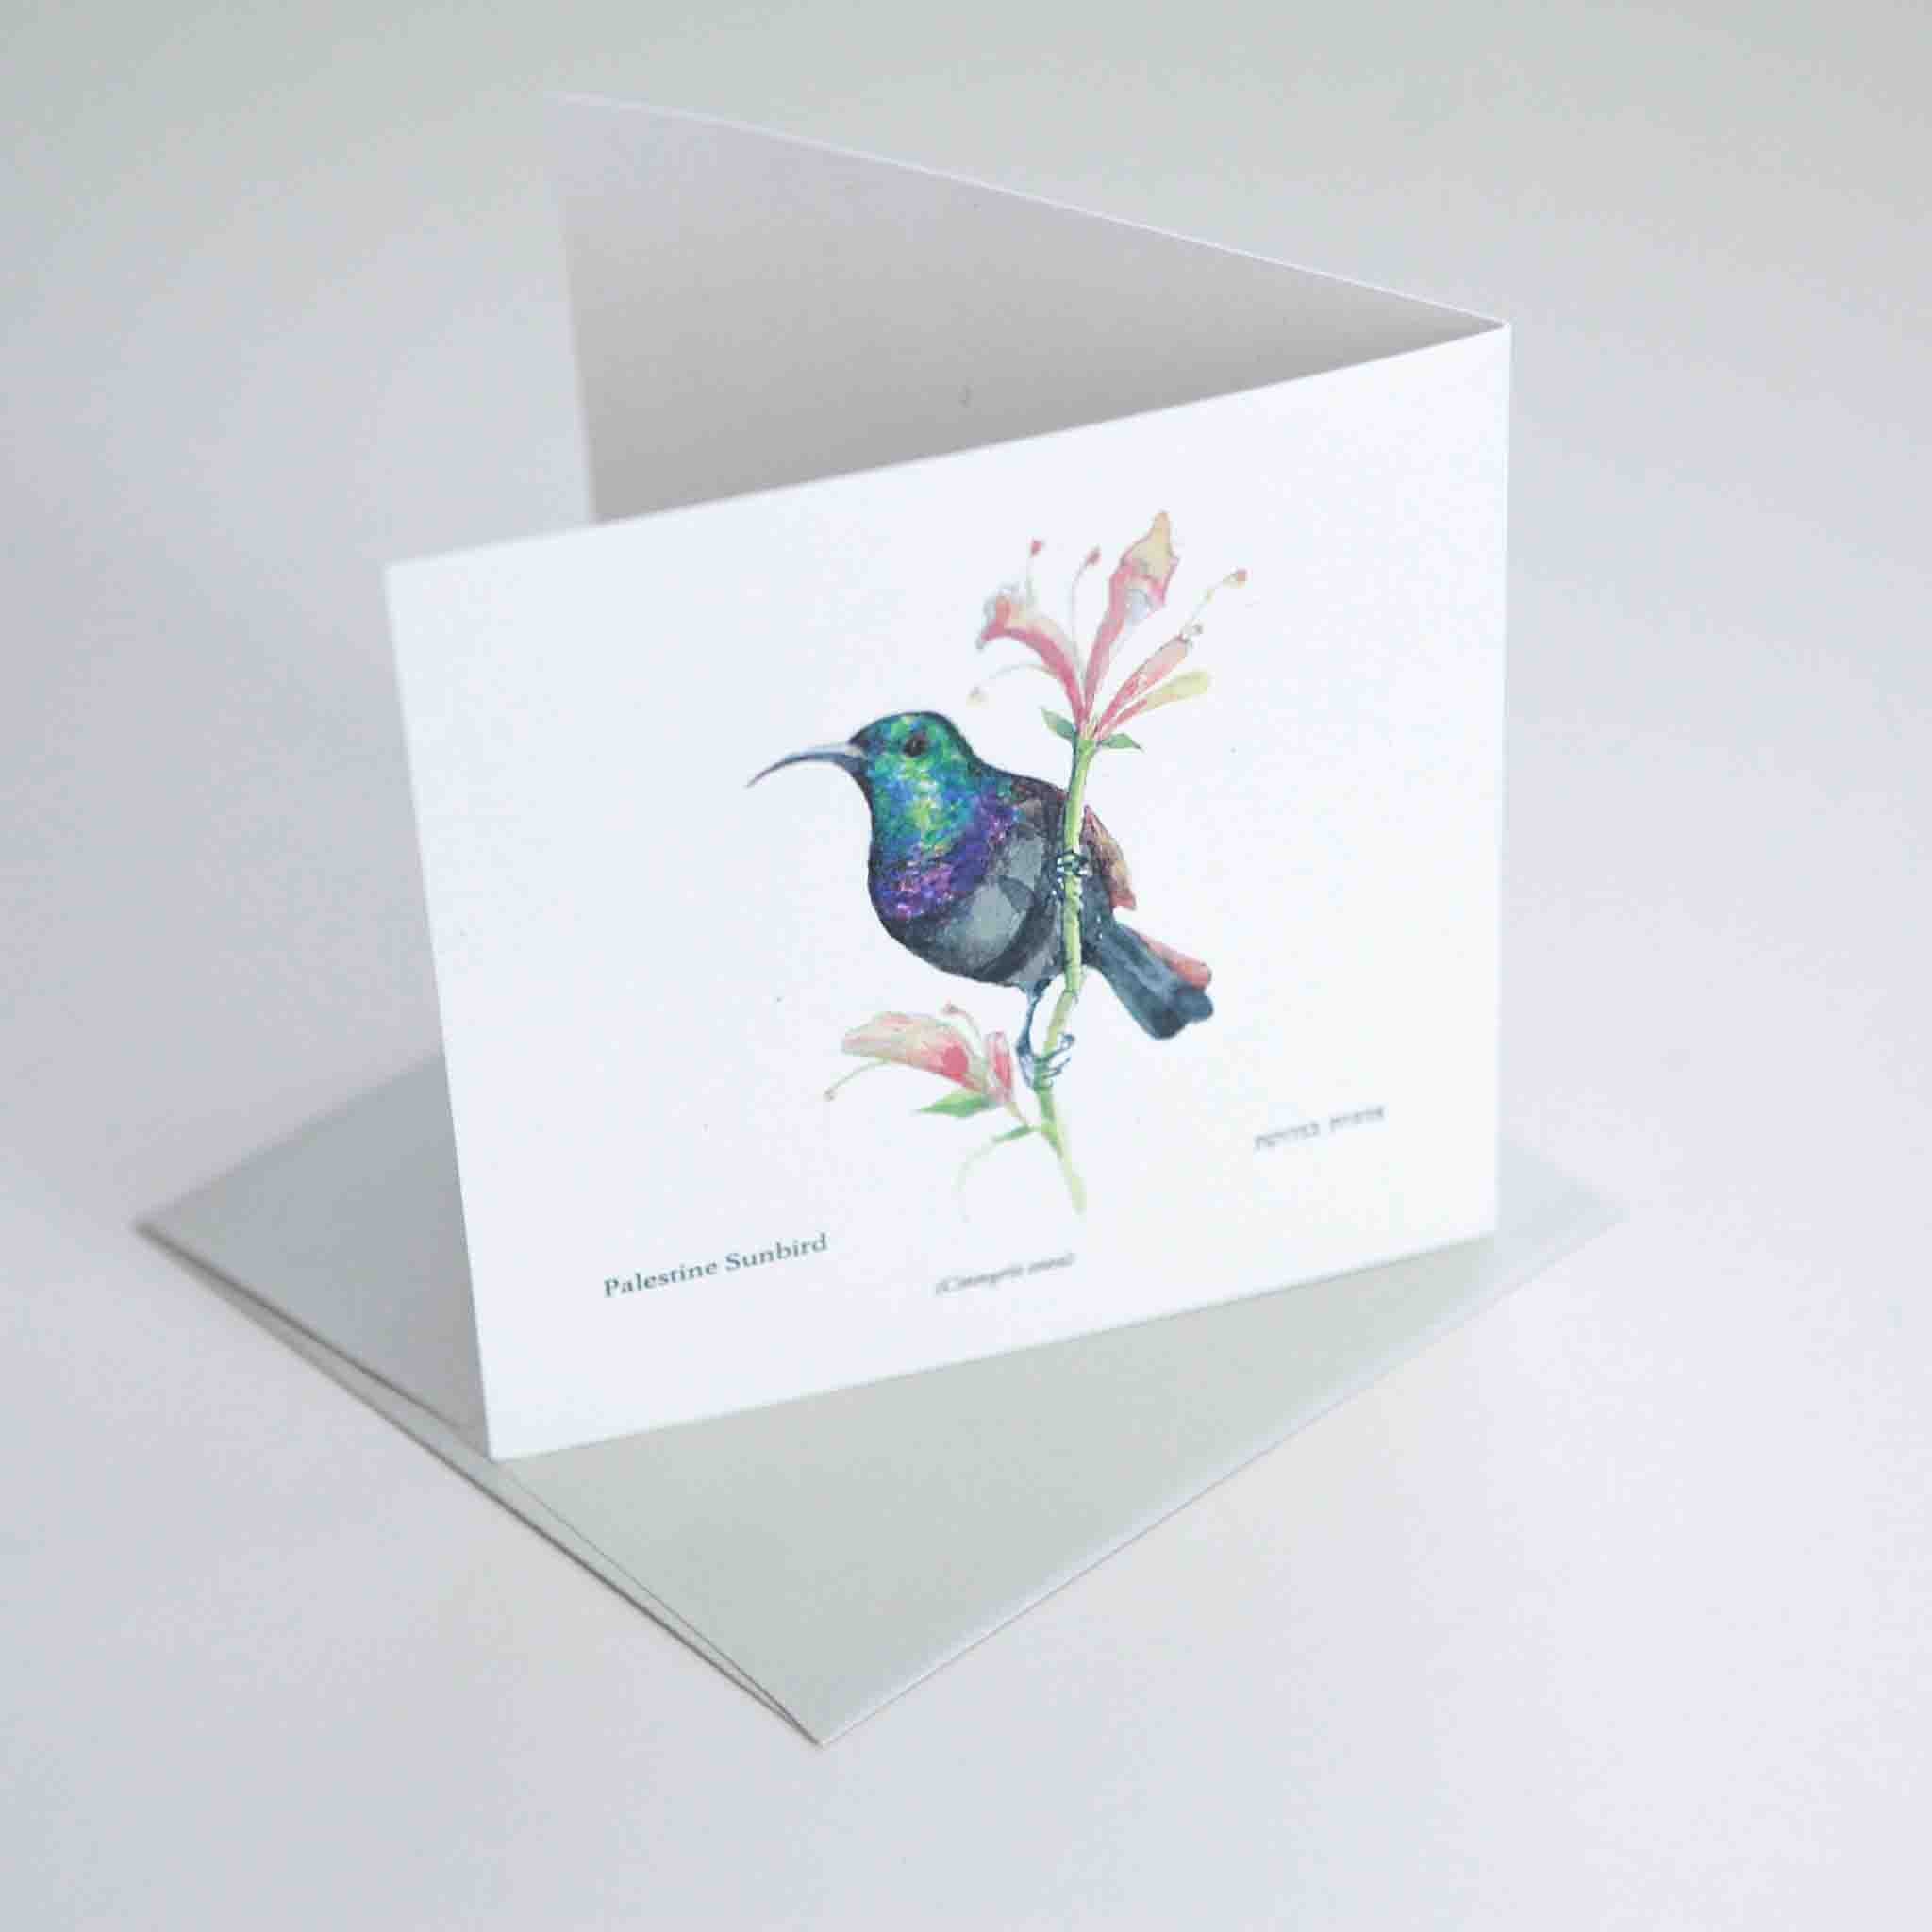 Palestine Sunbird Greeting card